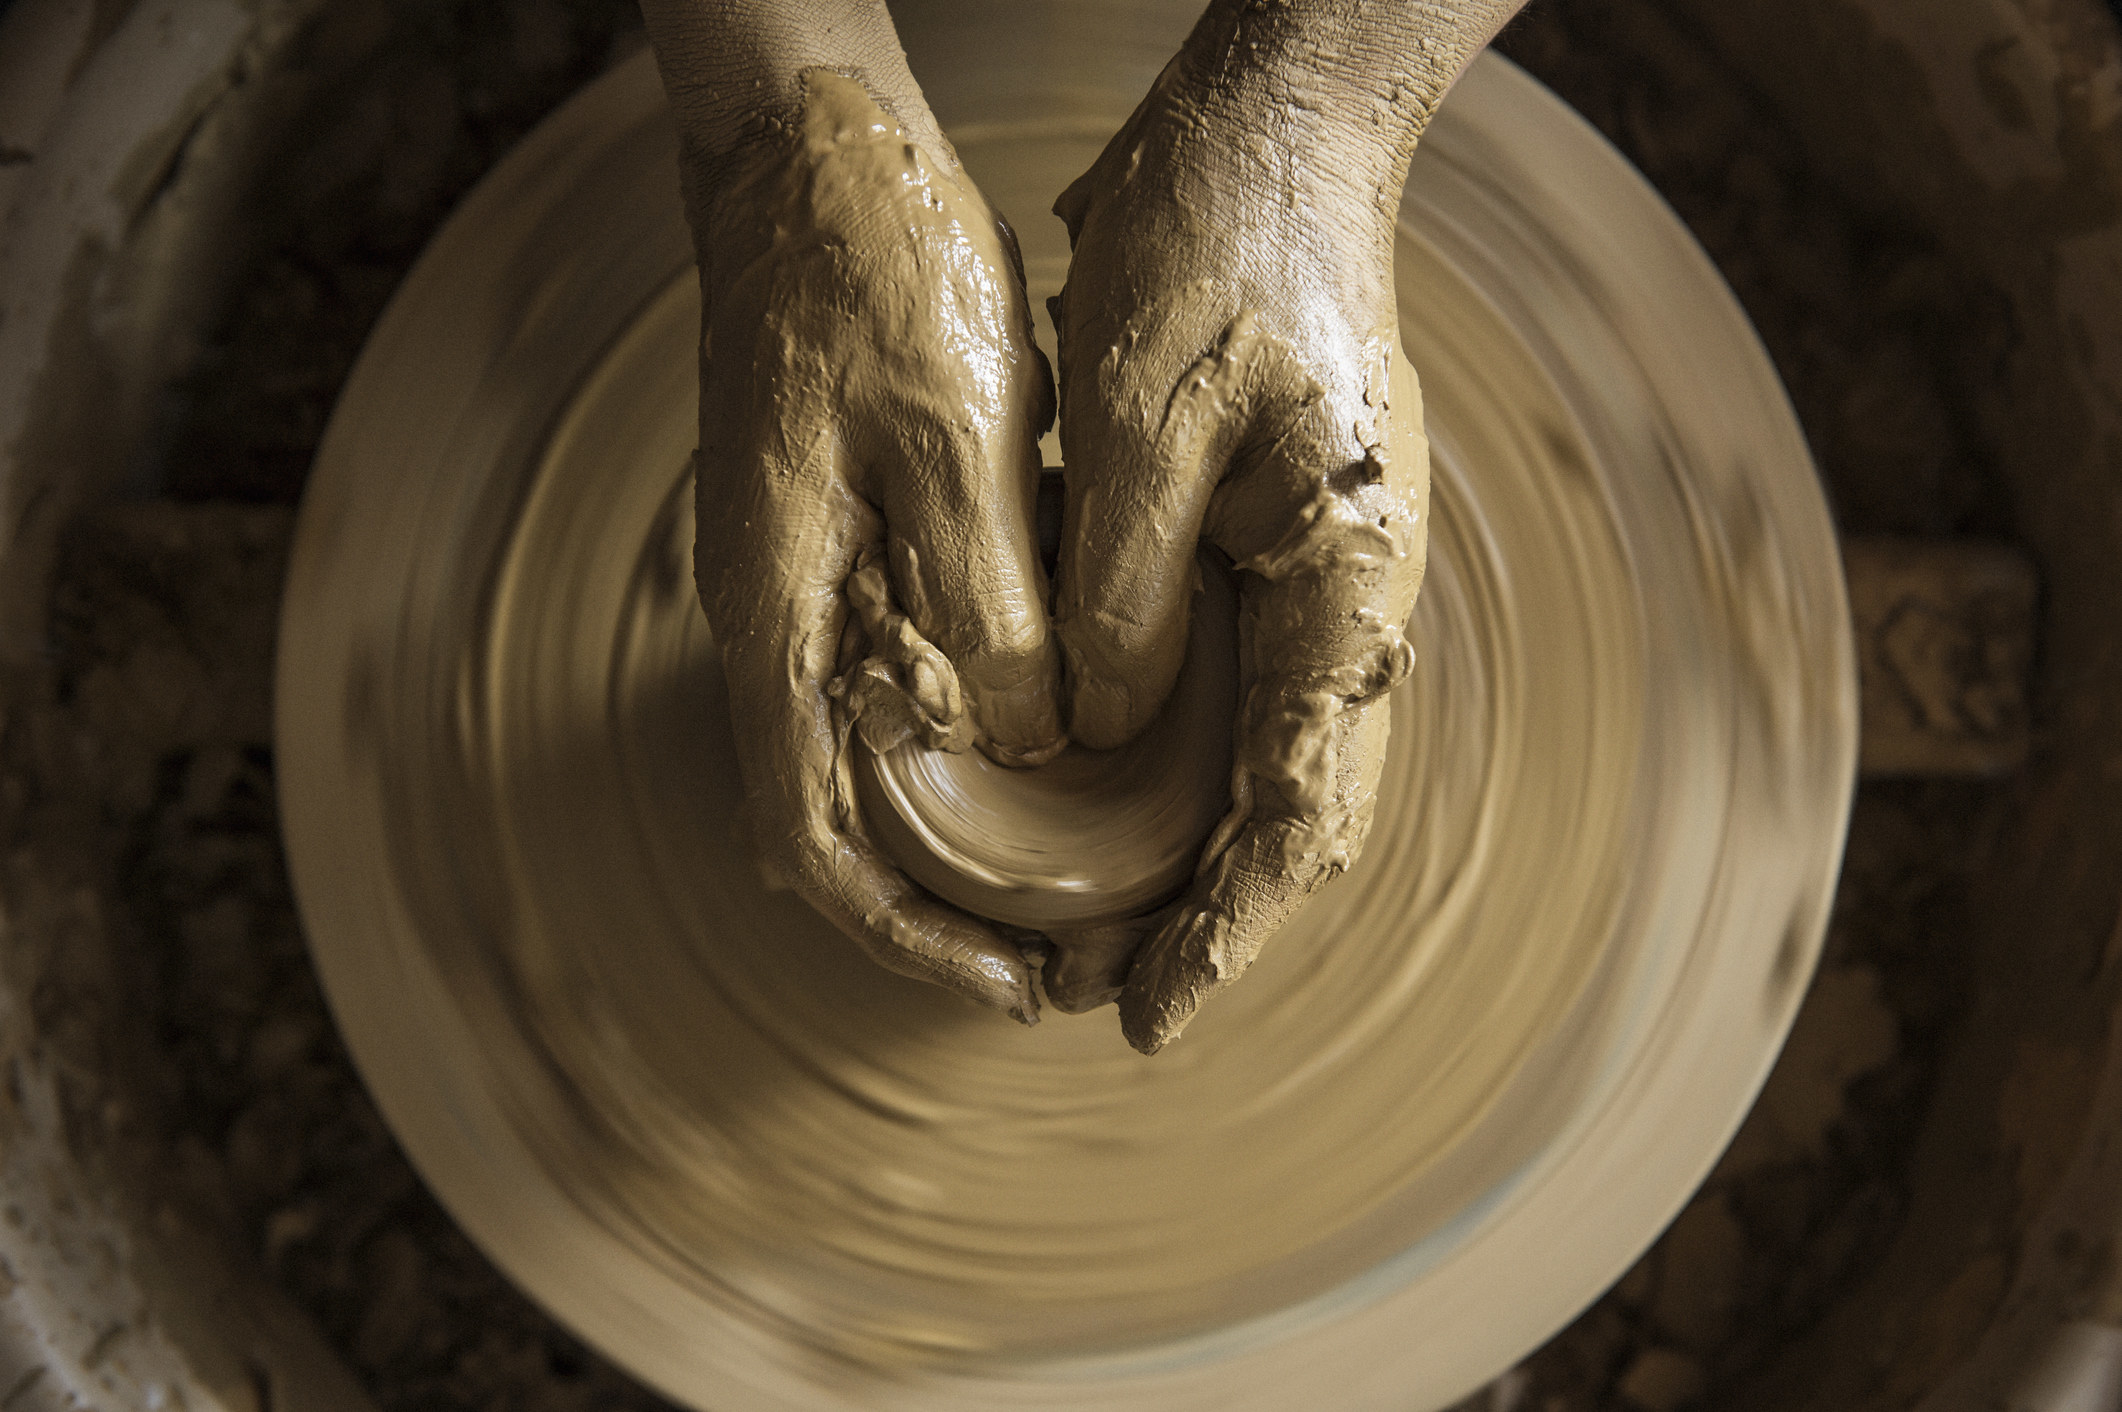 A woman using a pottery wheel.